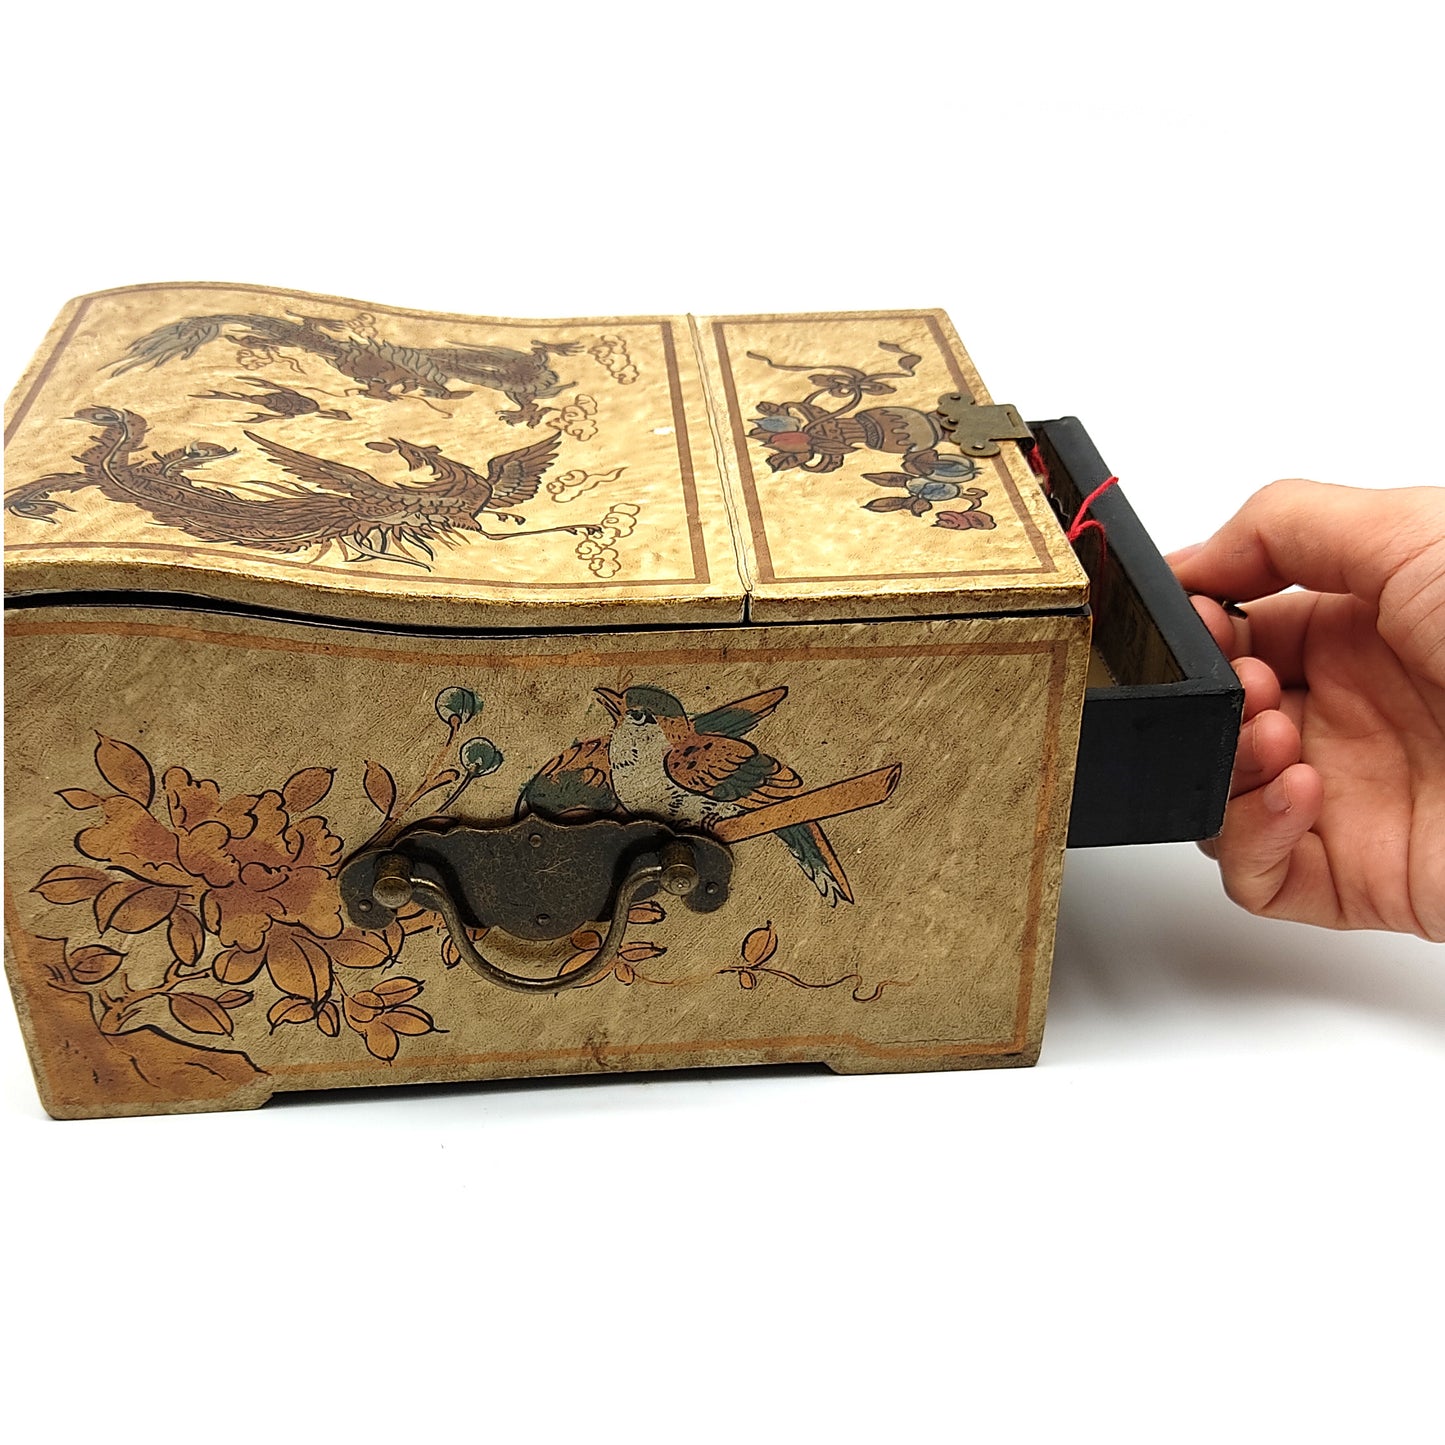 Oriental Jewelry Mirror Trinket Keepsake Wood Decorative Box Handmade 8" Long